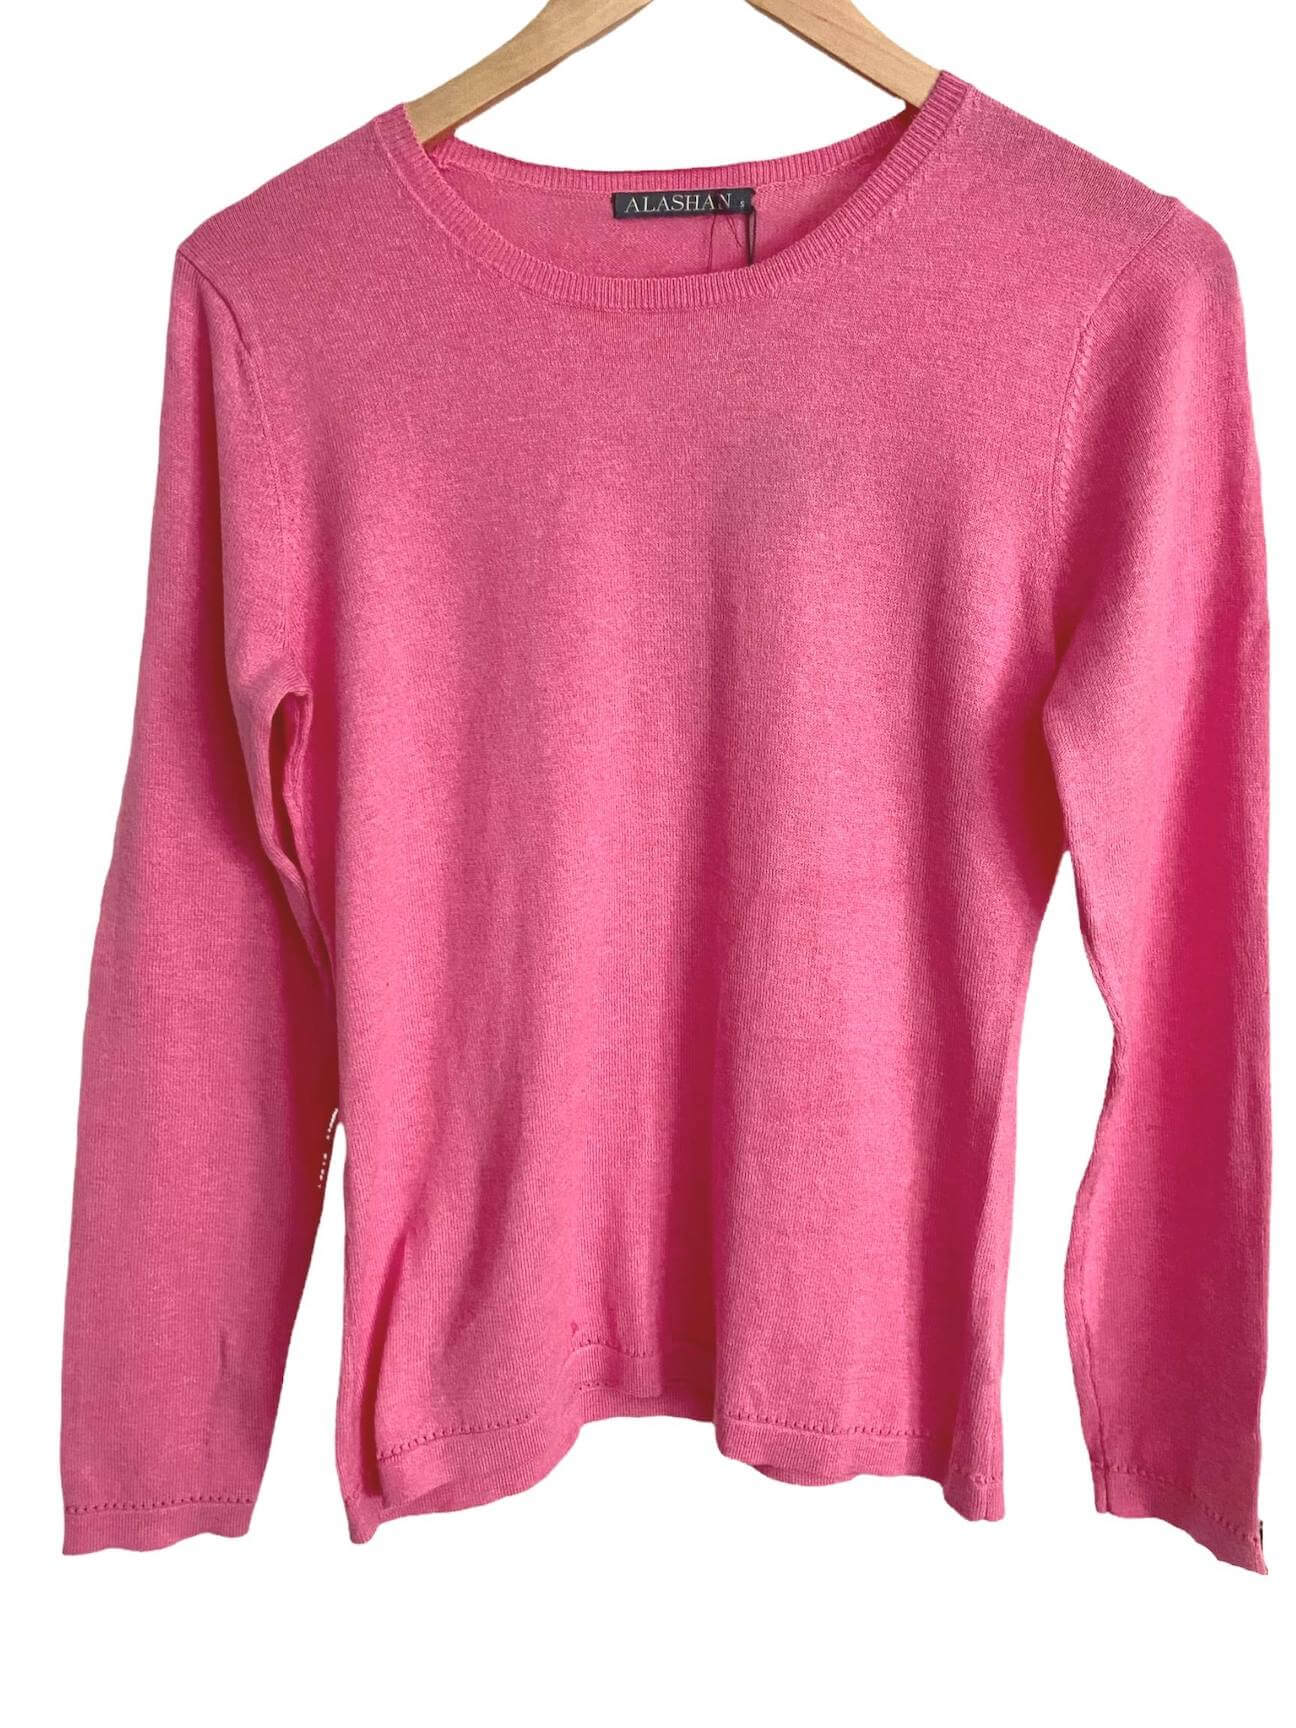 Cool Summer ALASHAN pink cashmere sweater